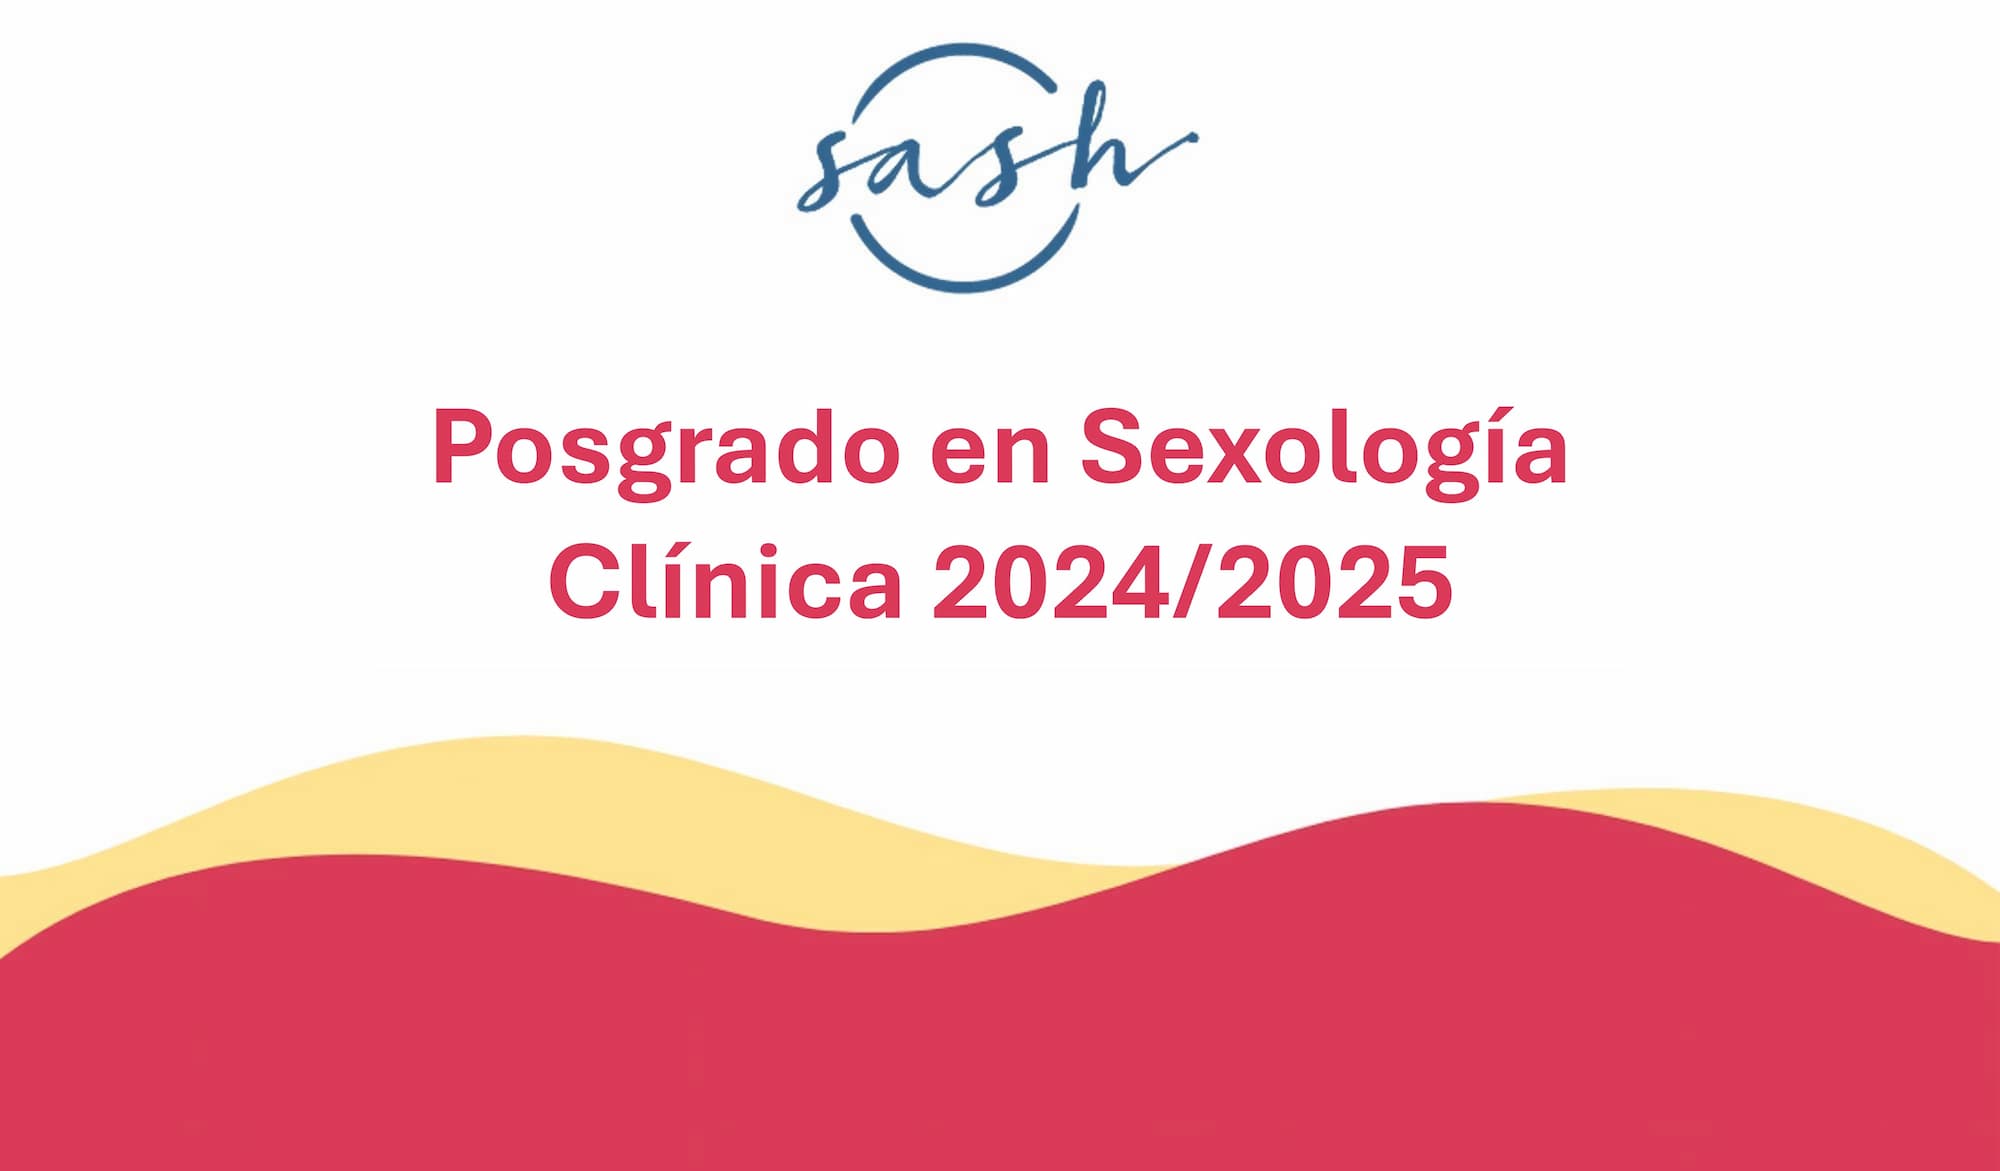 Posgrado en Sexología Clínica - 2024/2025